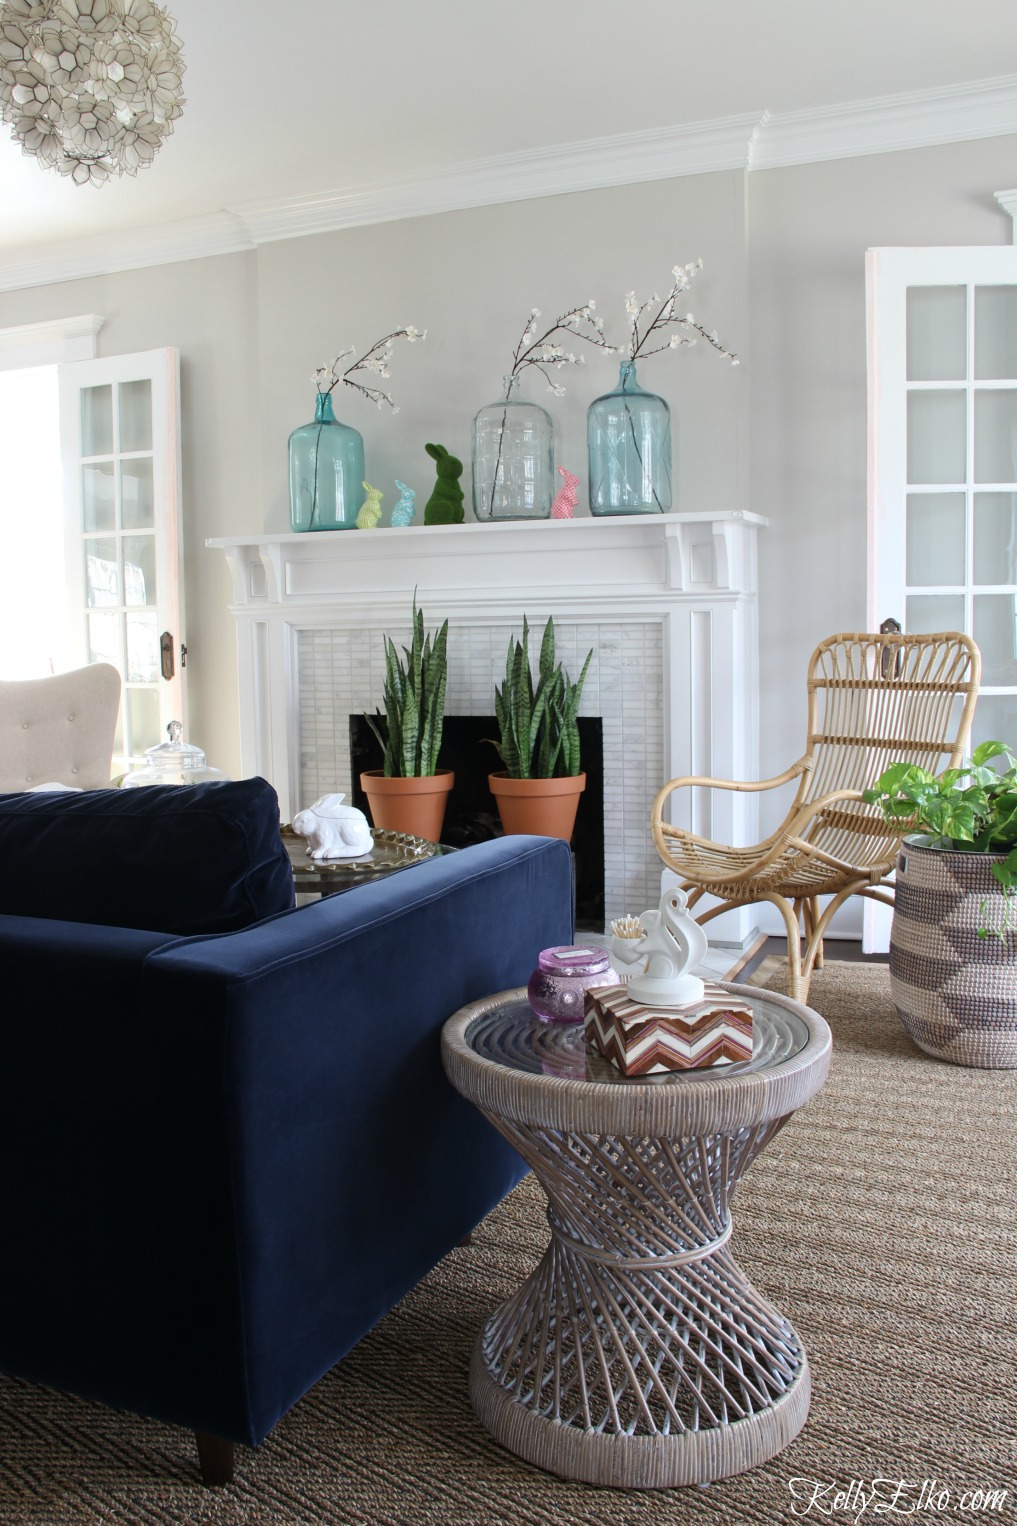 25 Spring Decorating Ideas - love this living room mantel with green glass jugs and bunnies. Rattan furniture, baskets and plants add a boho feel. kellyelko.com #spring #springdecor #homedecor #mantel #springmantel #vintagedecor